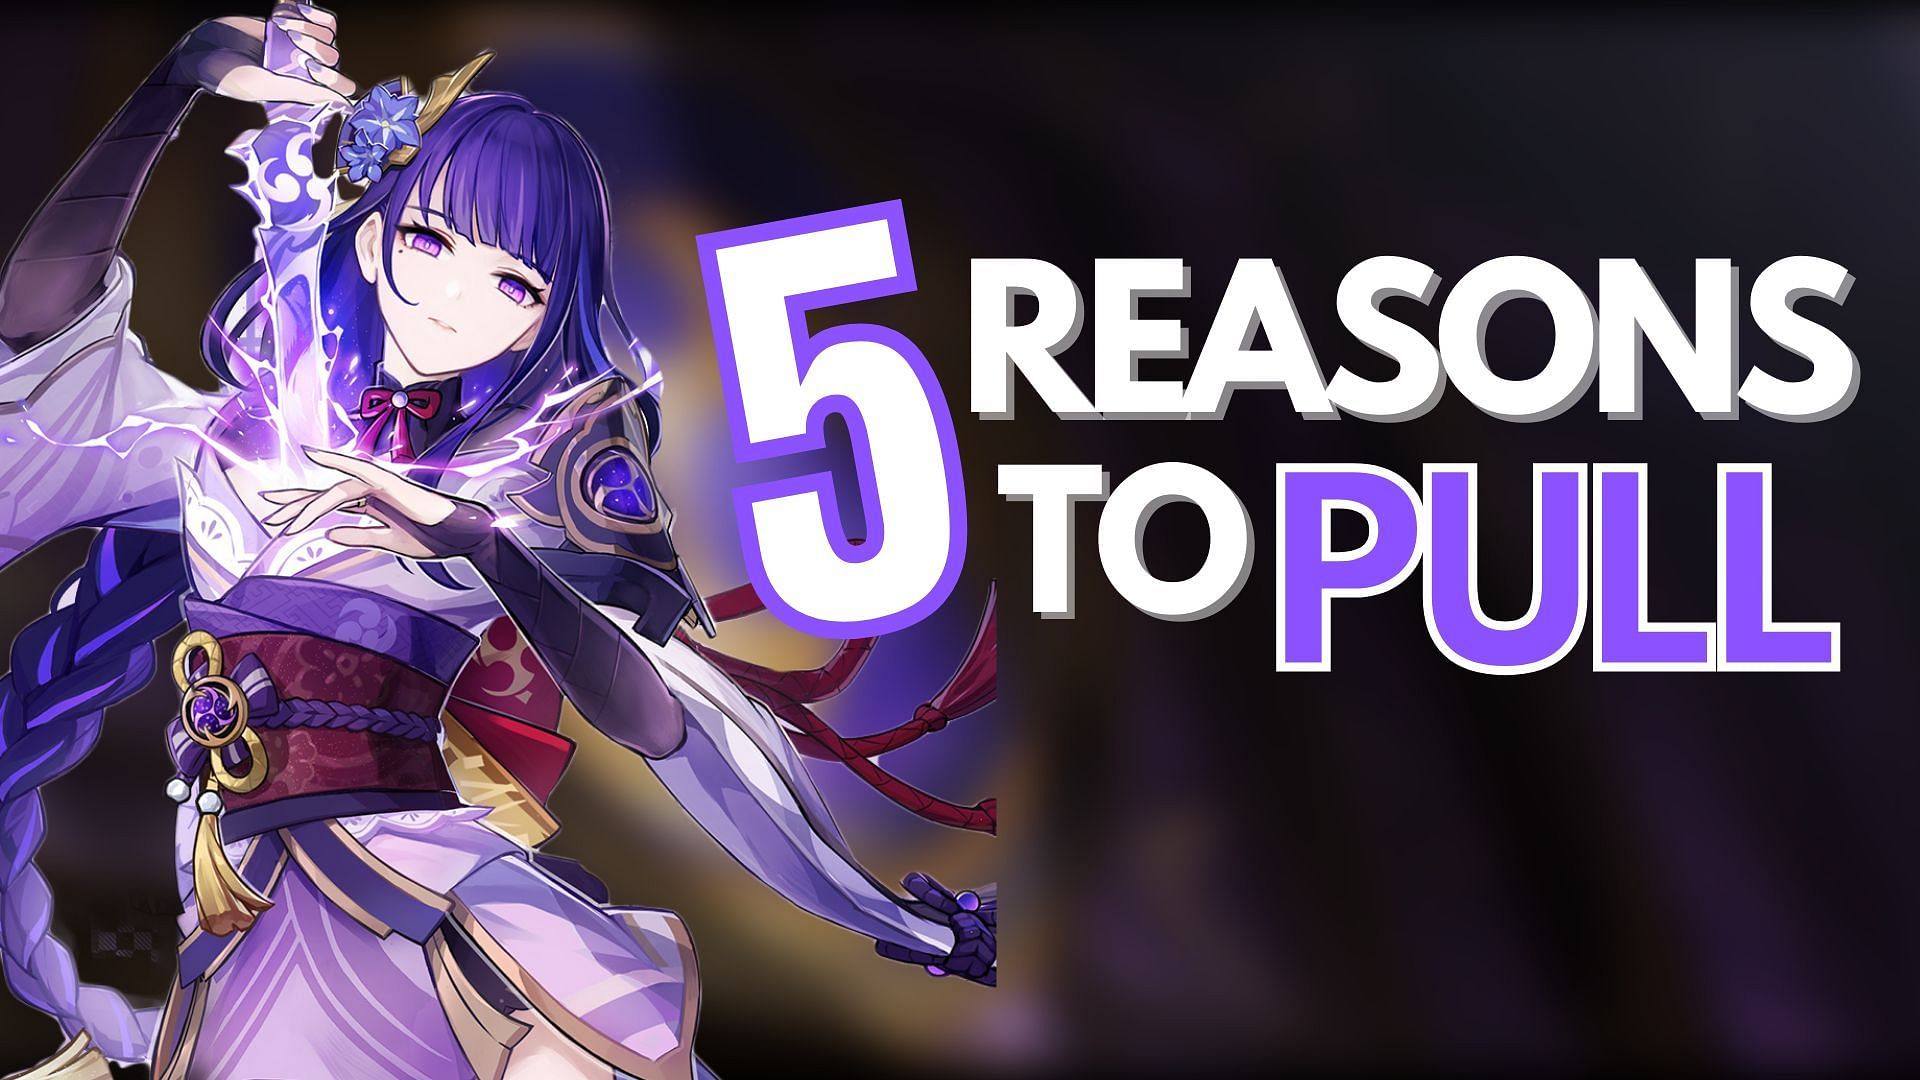 5 Reasons to pull for Raiden Shogun in the next Genshin Impact banner (Image via Genshin Impact)